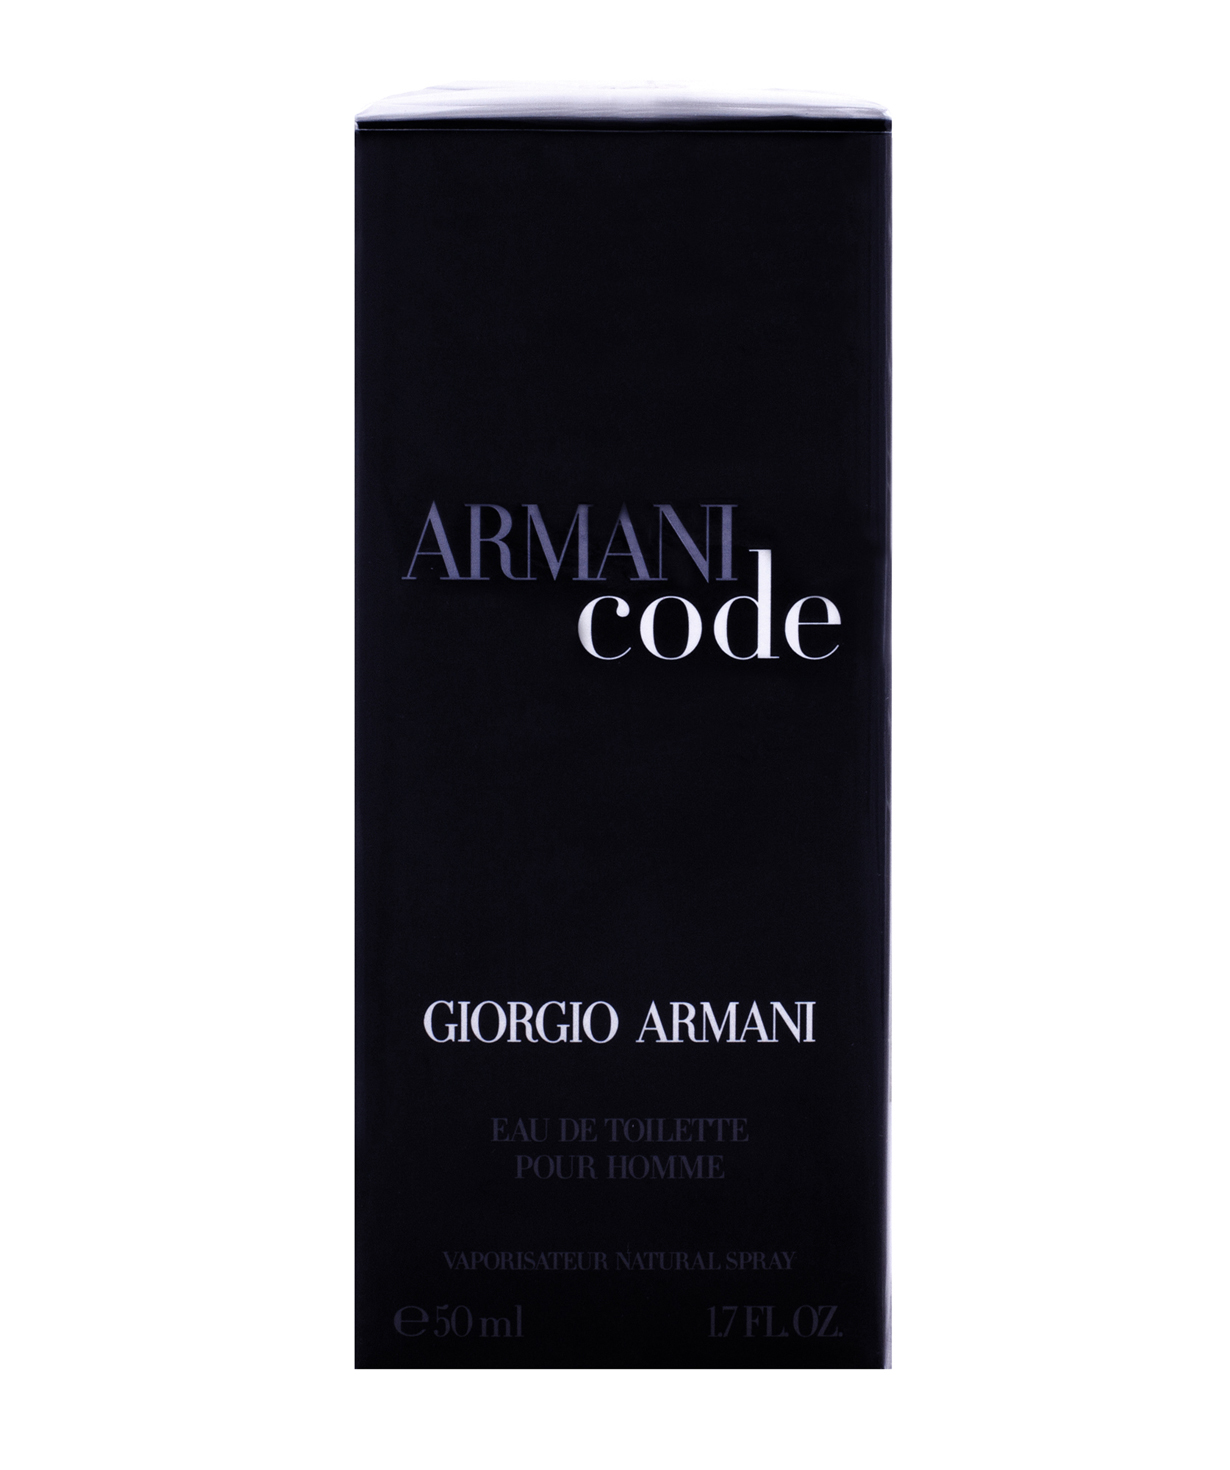 Օծանելիք «Armani» Code, 50 մլ